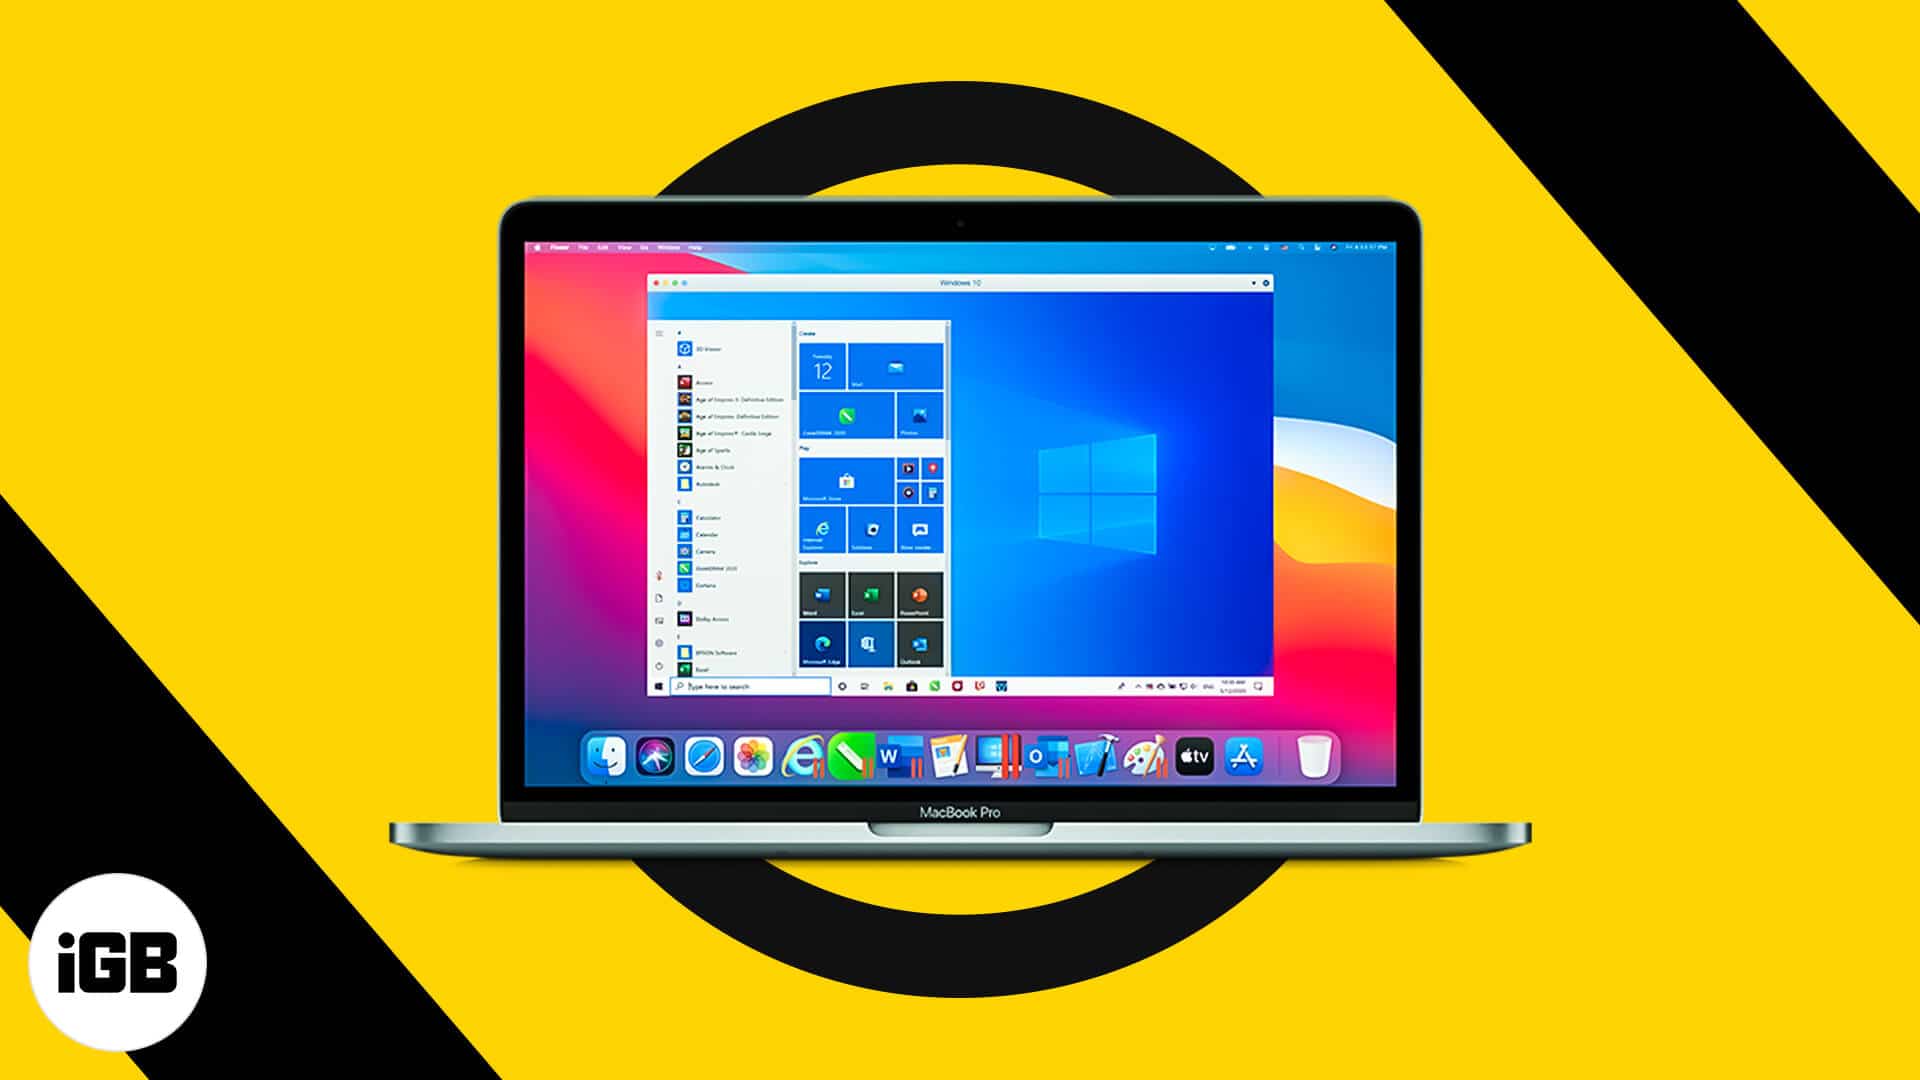 mac browser emulator for windows